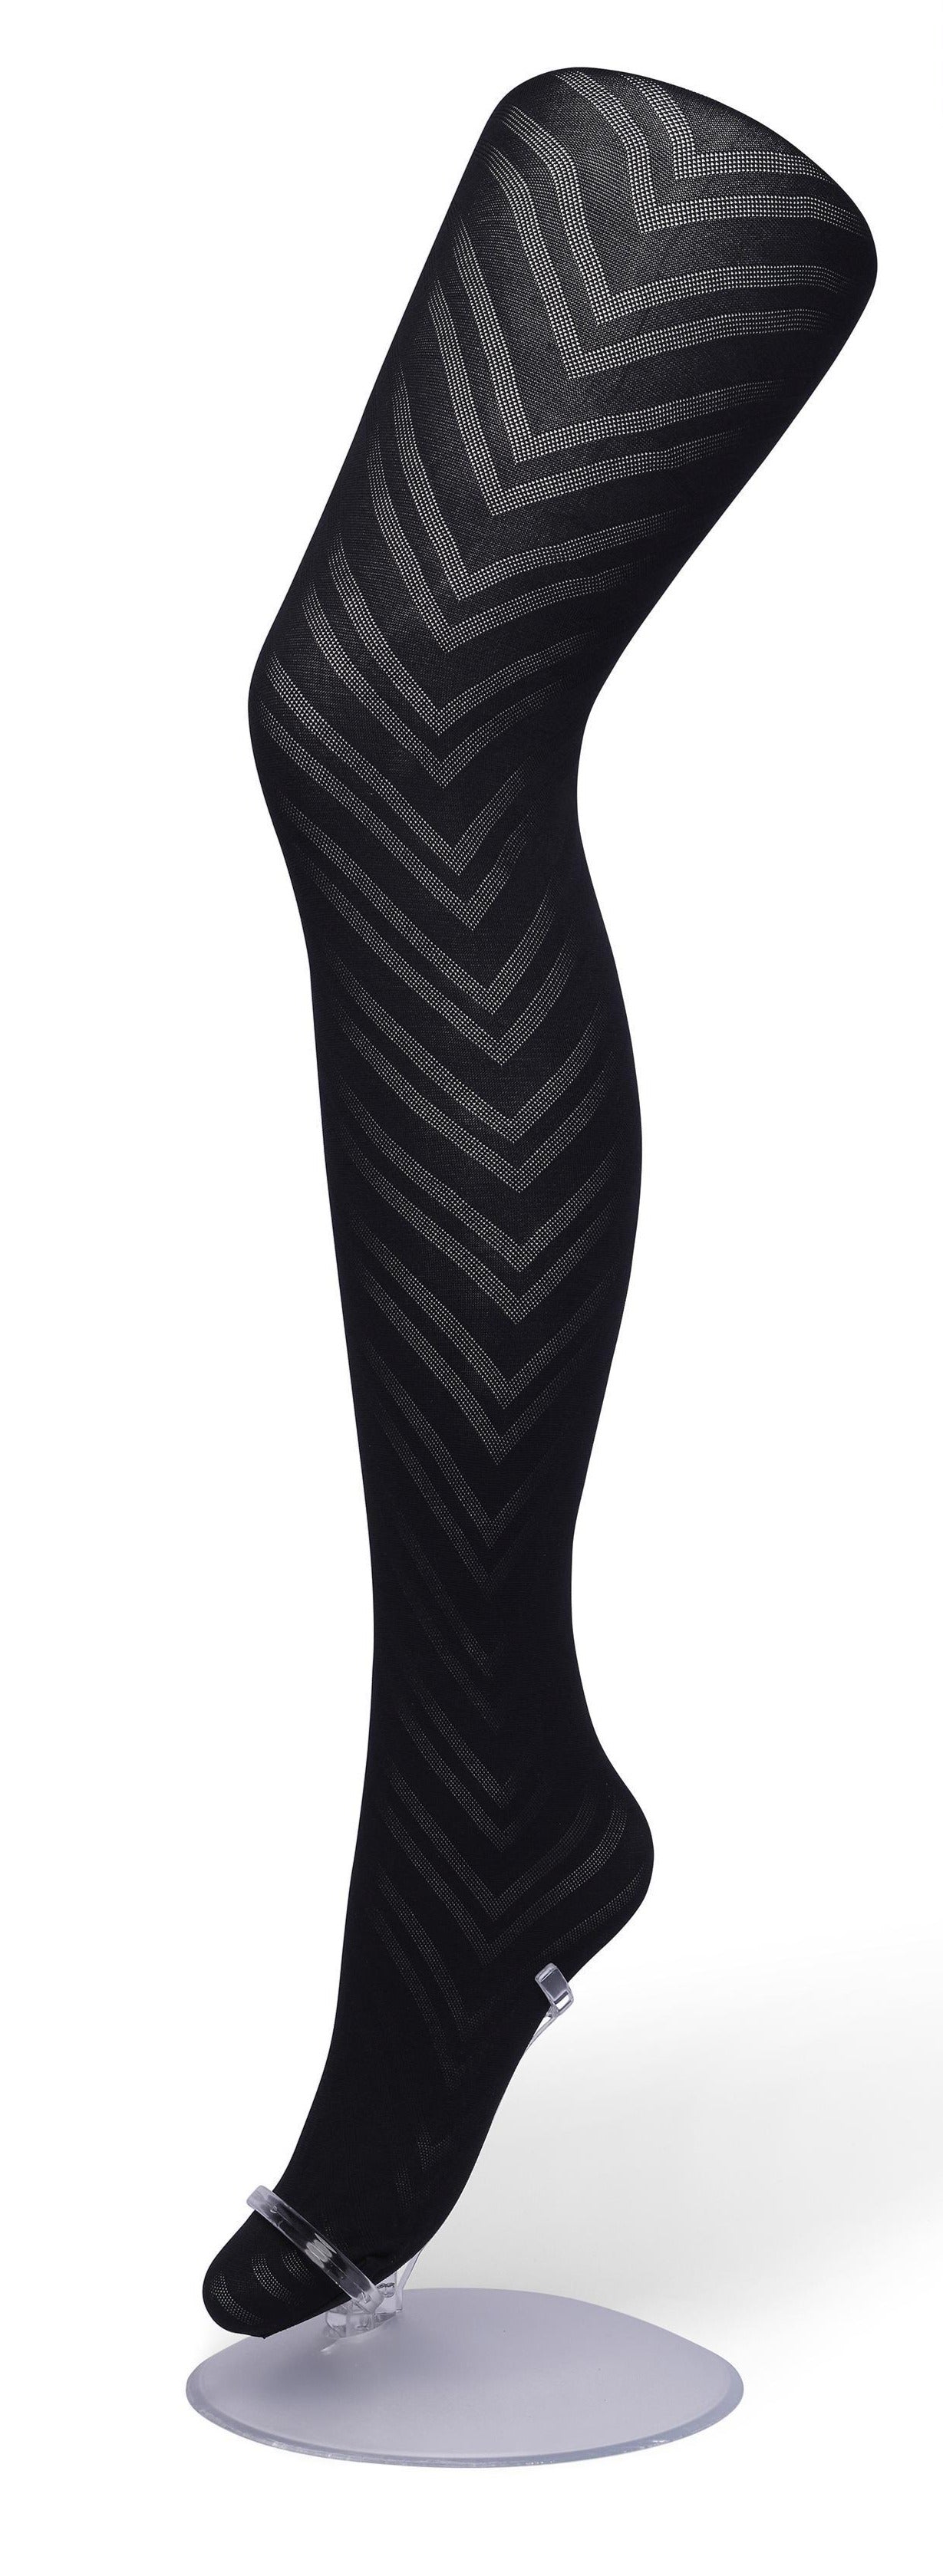 Bonnie Doon BP211906 Zigzag Tights - Black opaque fashion tights with a semi sheer zig-zag pattern.